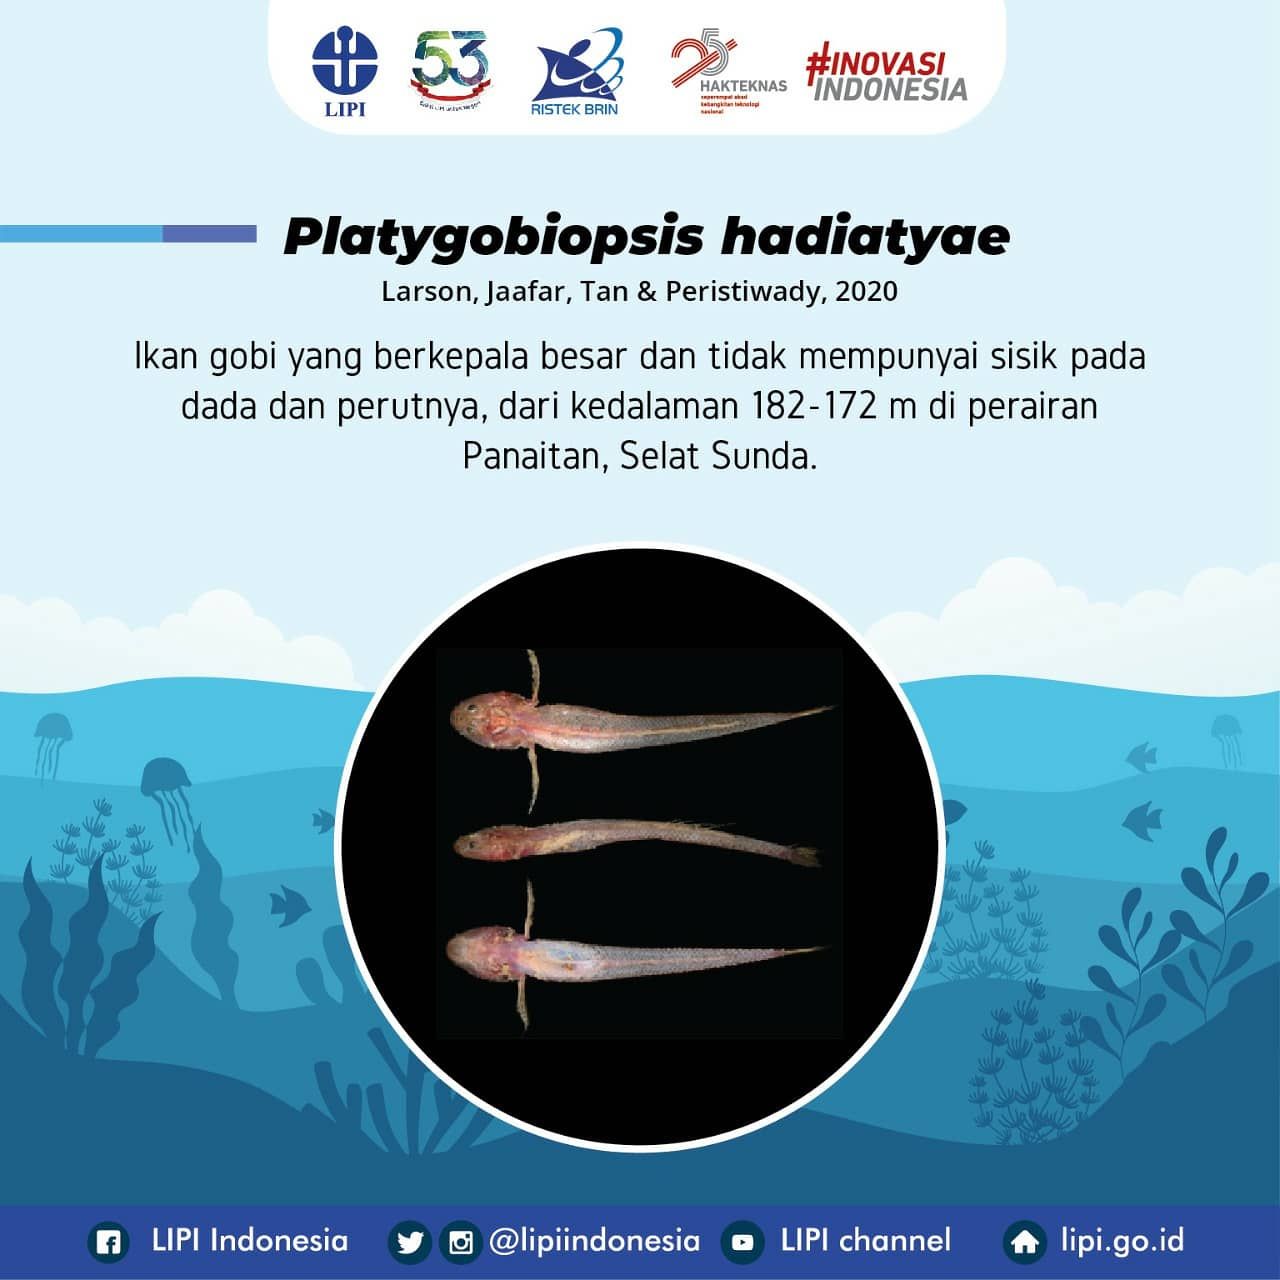 Platygobiopsis hadiatyae,